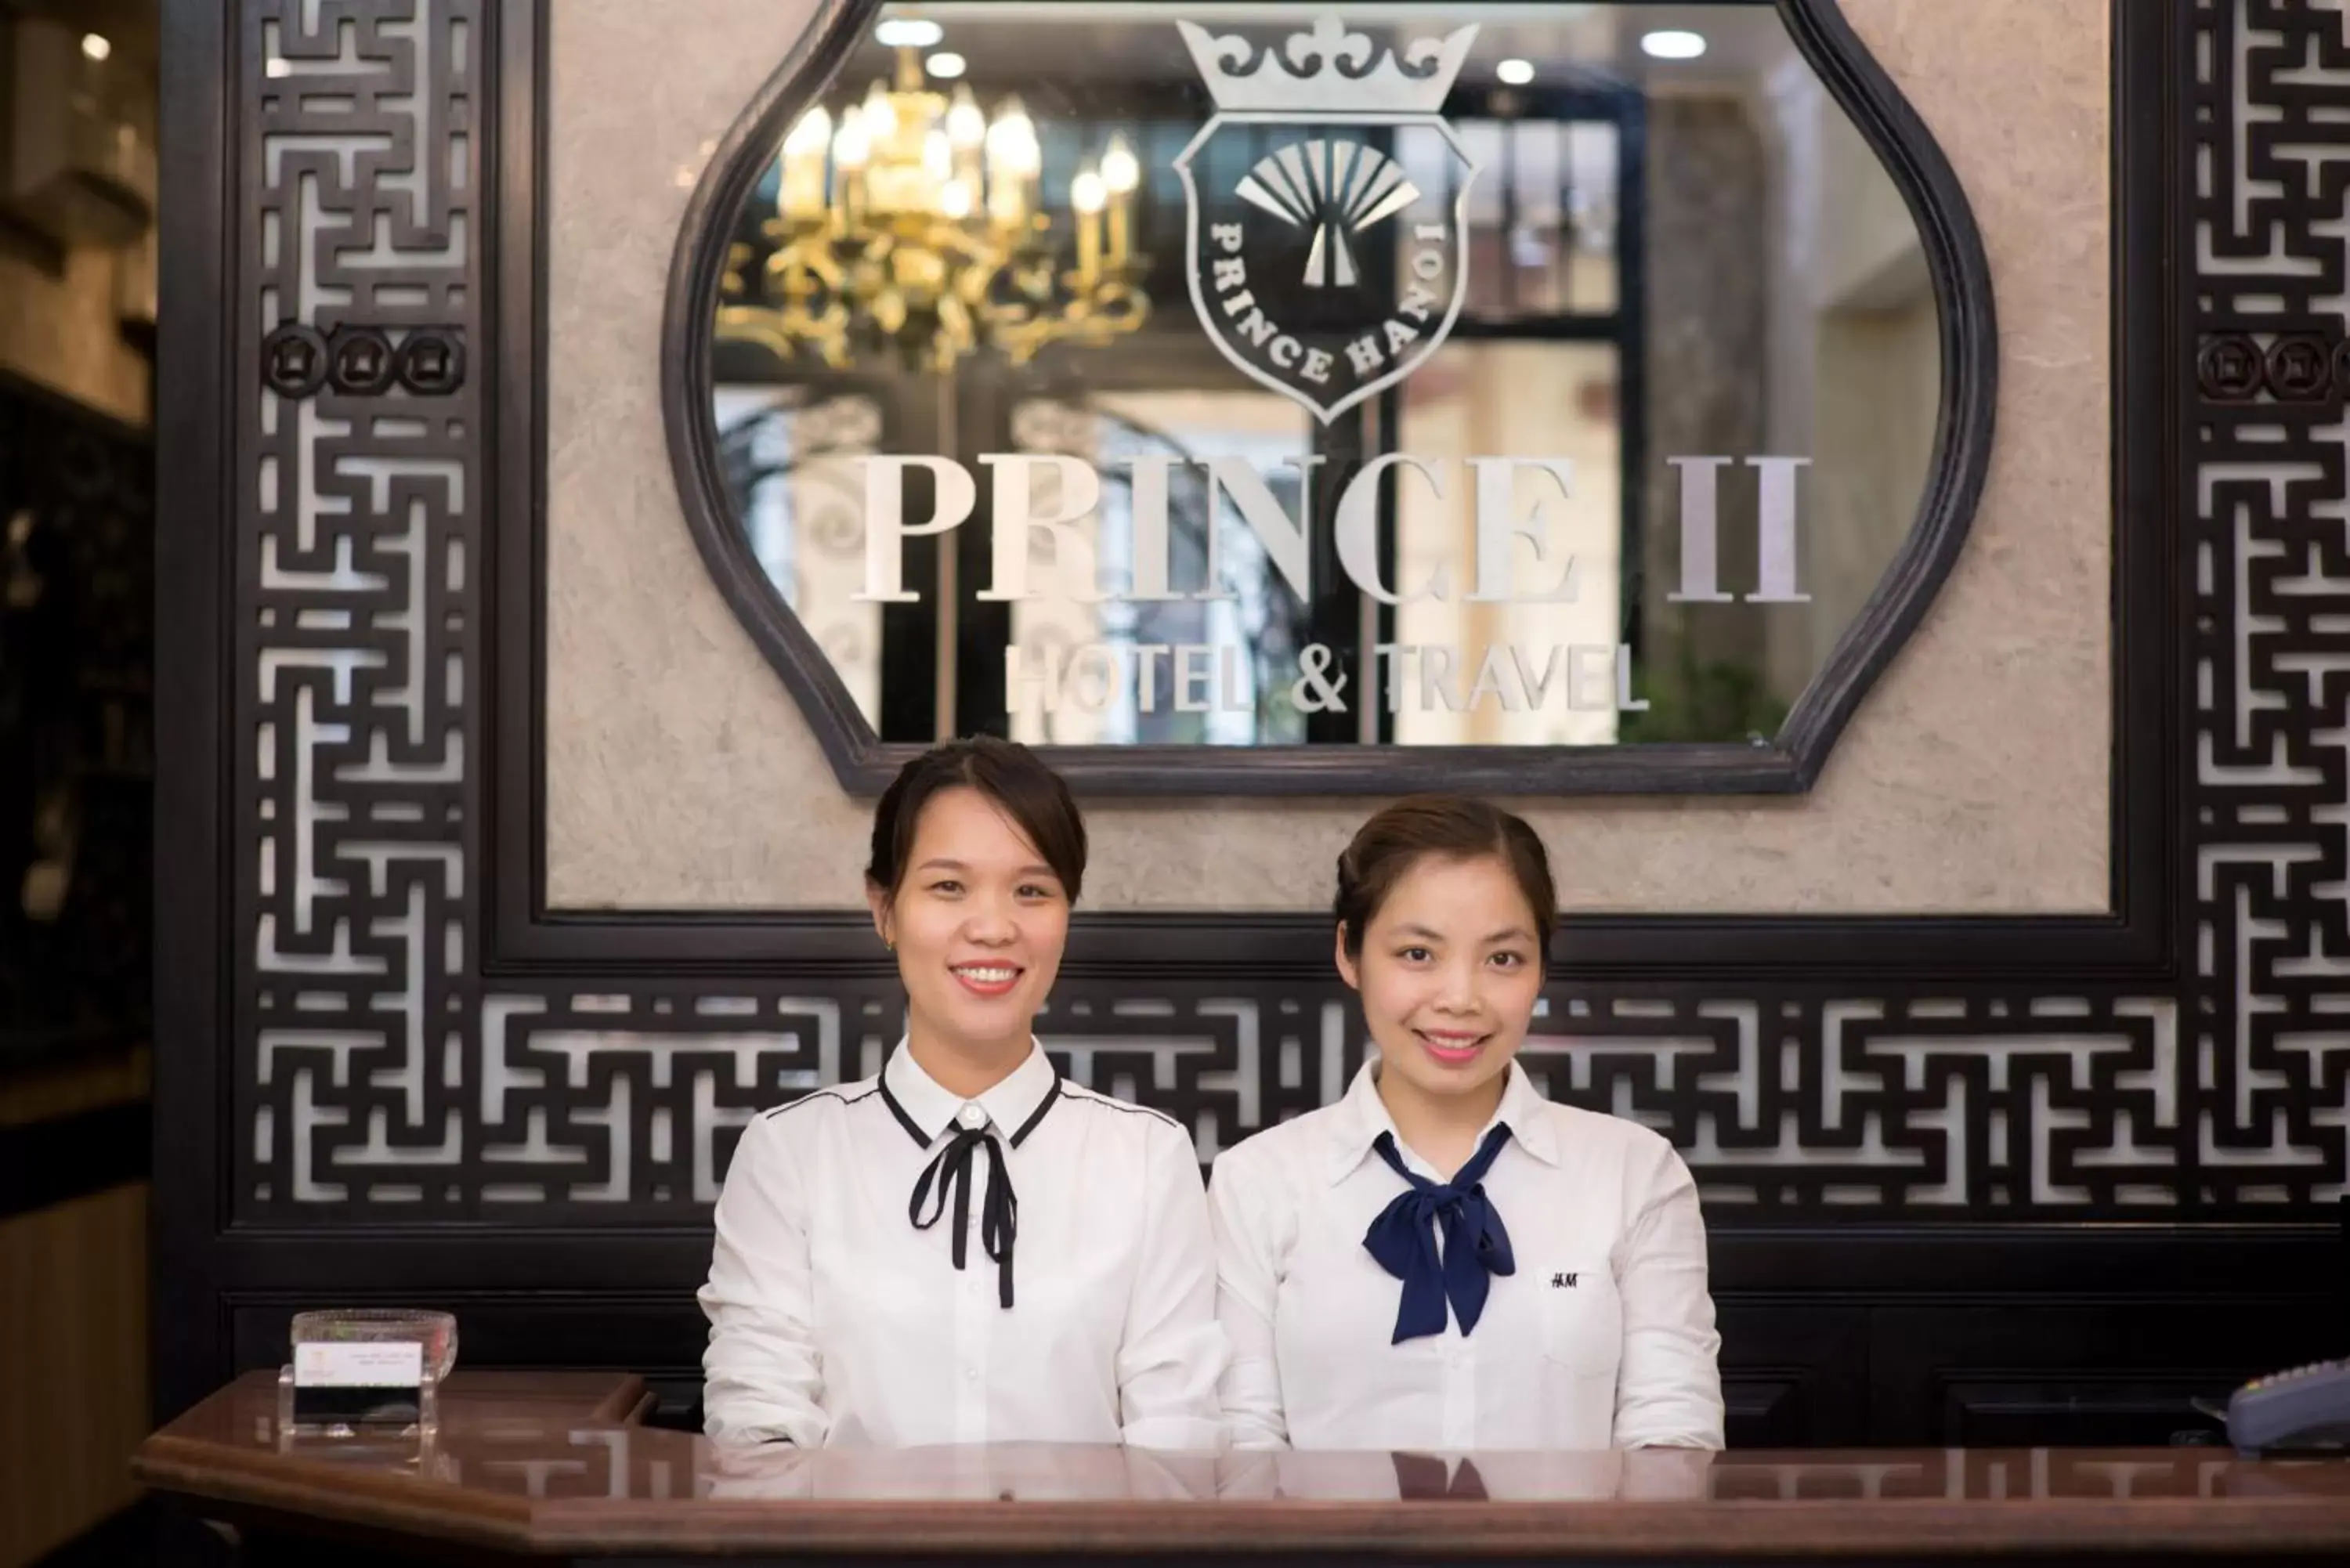 Lobby or reception, Staff in Prince II Hotel